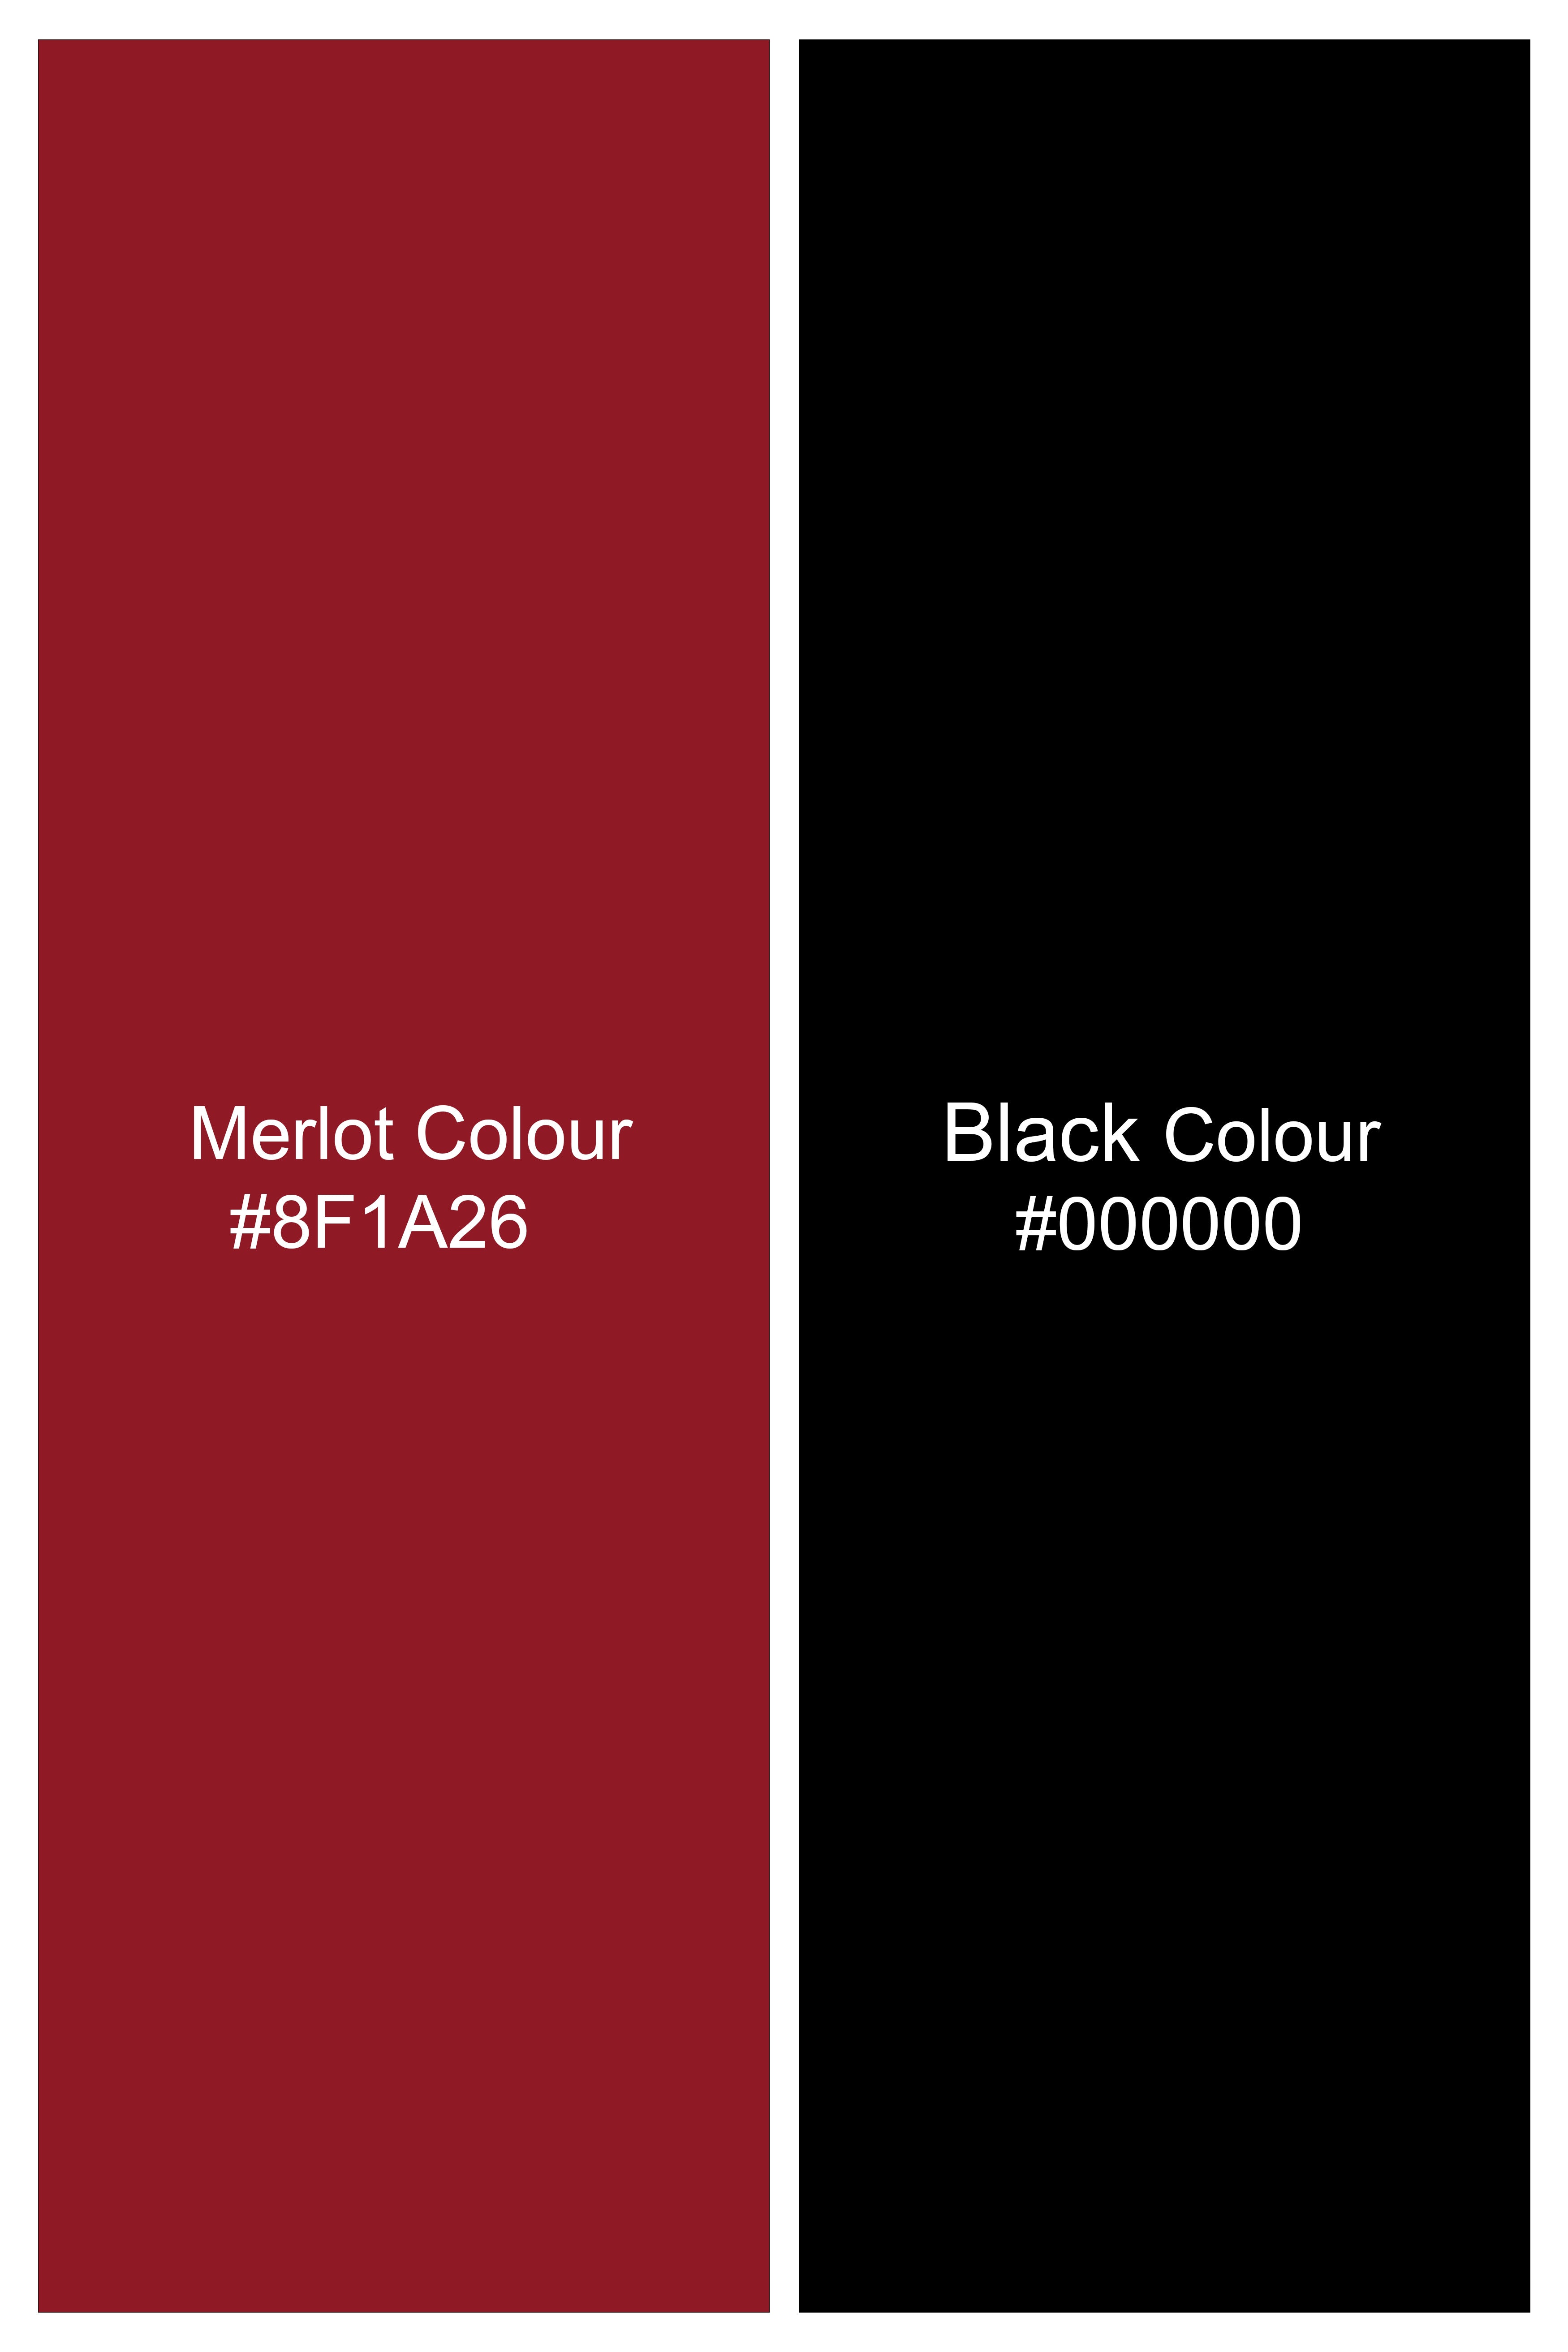 Merlot Red with Black Wool Rich Designer Blazer BL2849-SB-D15-36, BL2849-SB-D15-38, BL2849-SB-D15-40, BL2849-SB-D15-42, BL2849-SB-D15-44, BL2849-SB-D15-46, BL2849-SB-D15-48, BL2849-SB-D15-50, BL2849-SB-D15-52, BL2849-SB-D15-54, BL2849-SB-D15-56, BL2849-SB-D15-58, BL2849-SB-D15-60